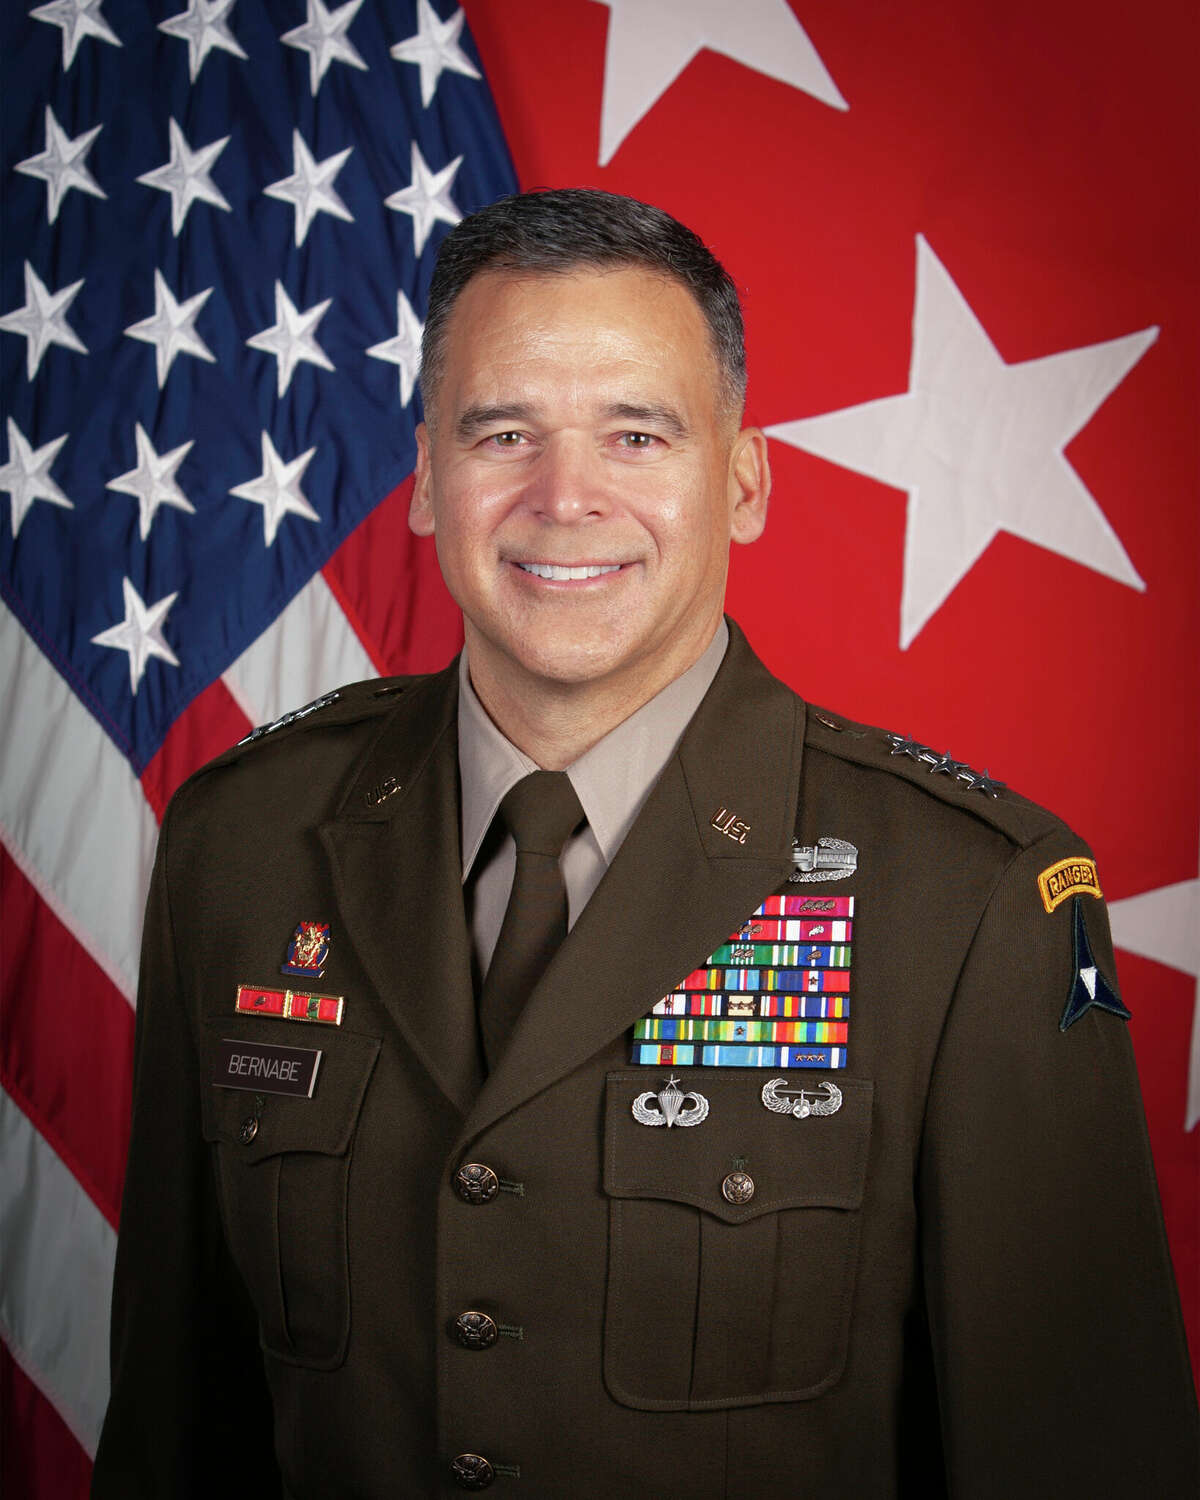 Lt. Gen. Sean C. Bernabe, commander of Fort Hood.